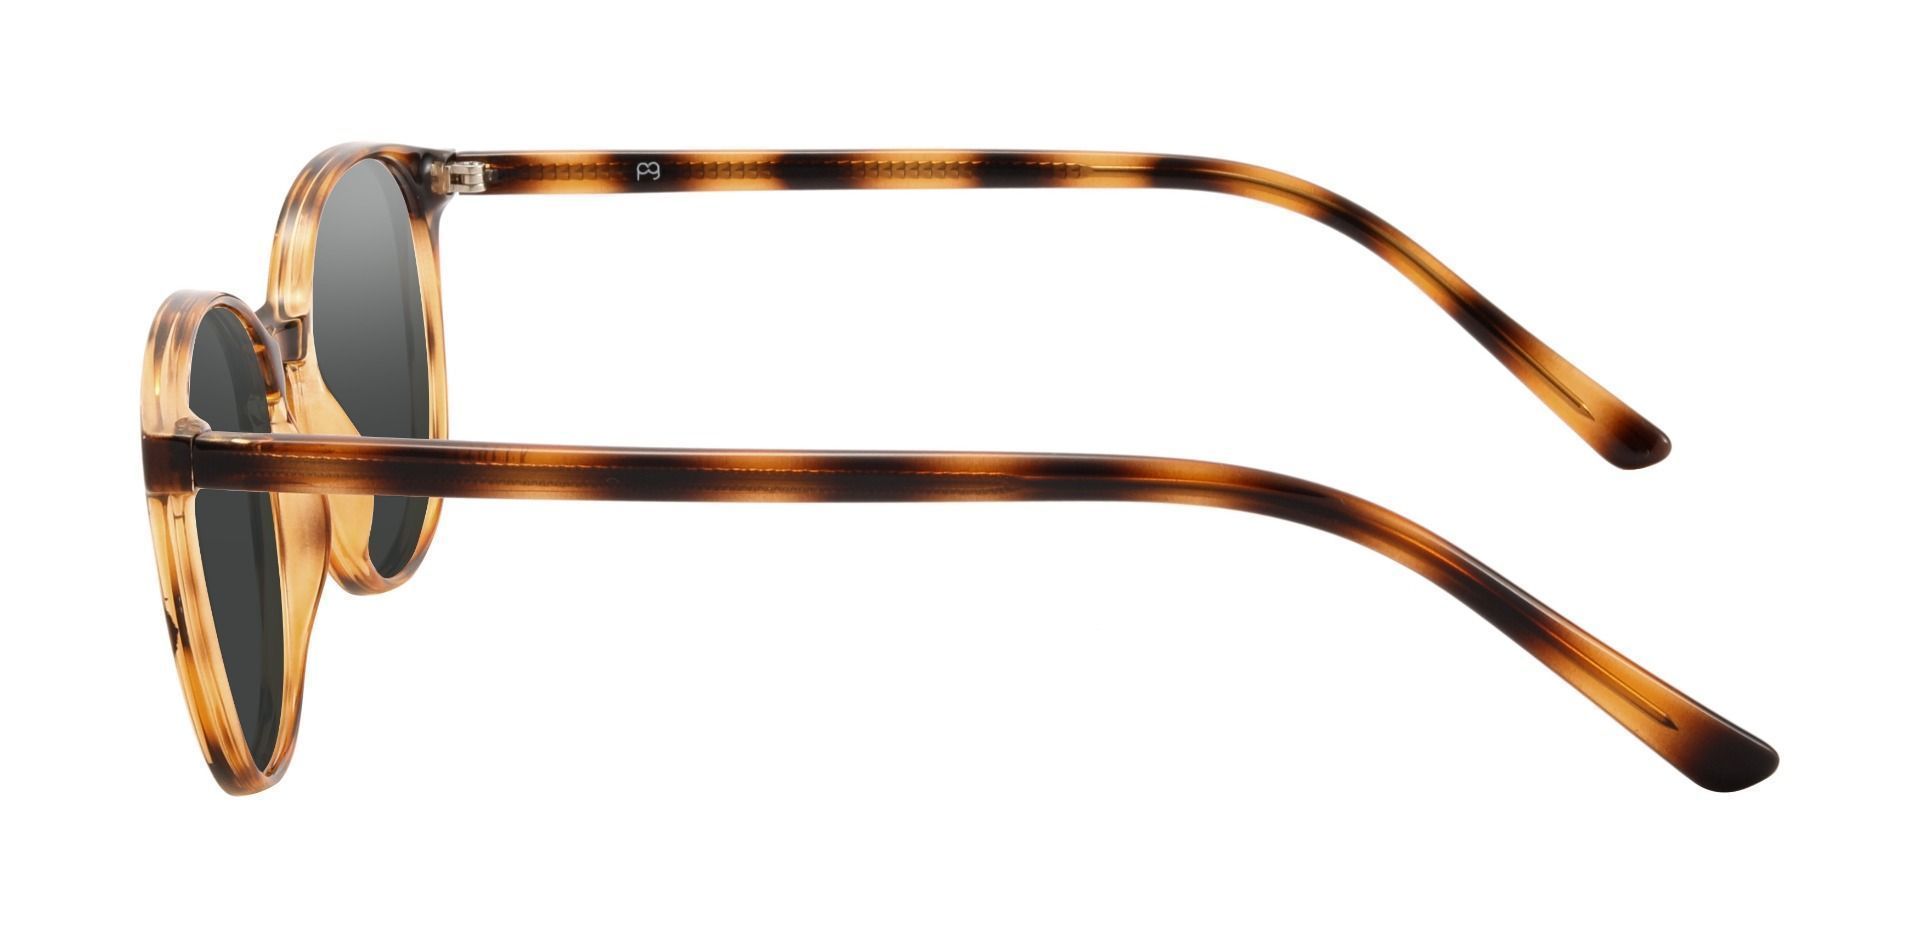 Shanley Oval Lined Bifocal Sunglasses - Tortoise Frame With Gray Lenses